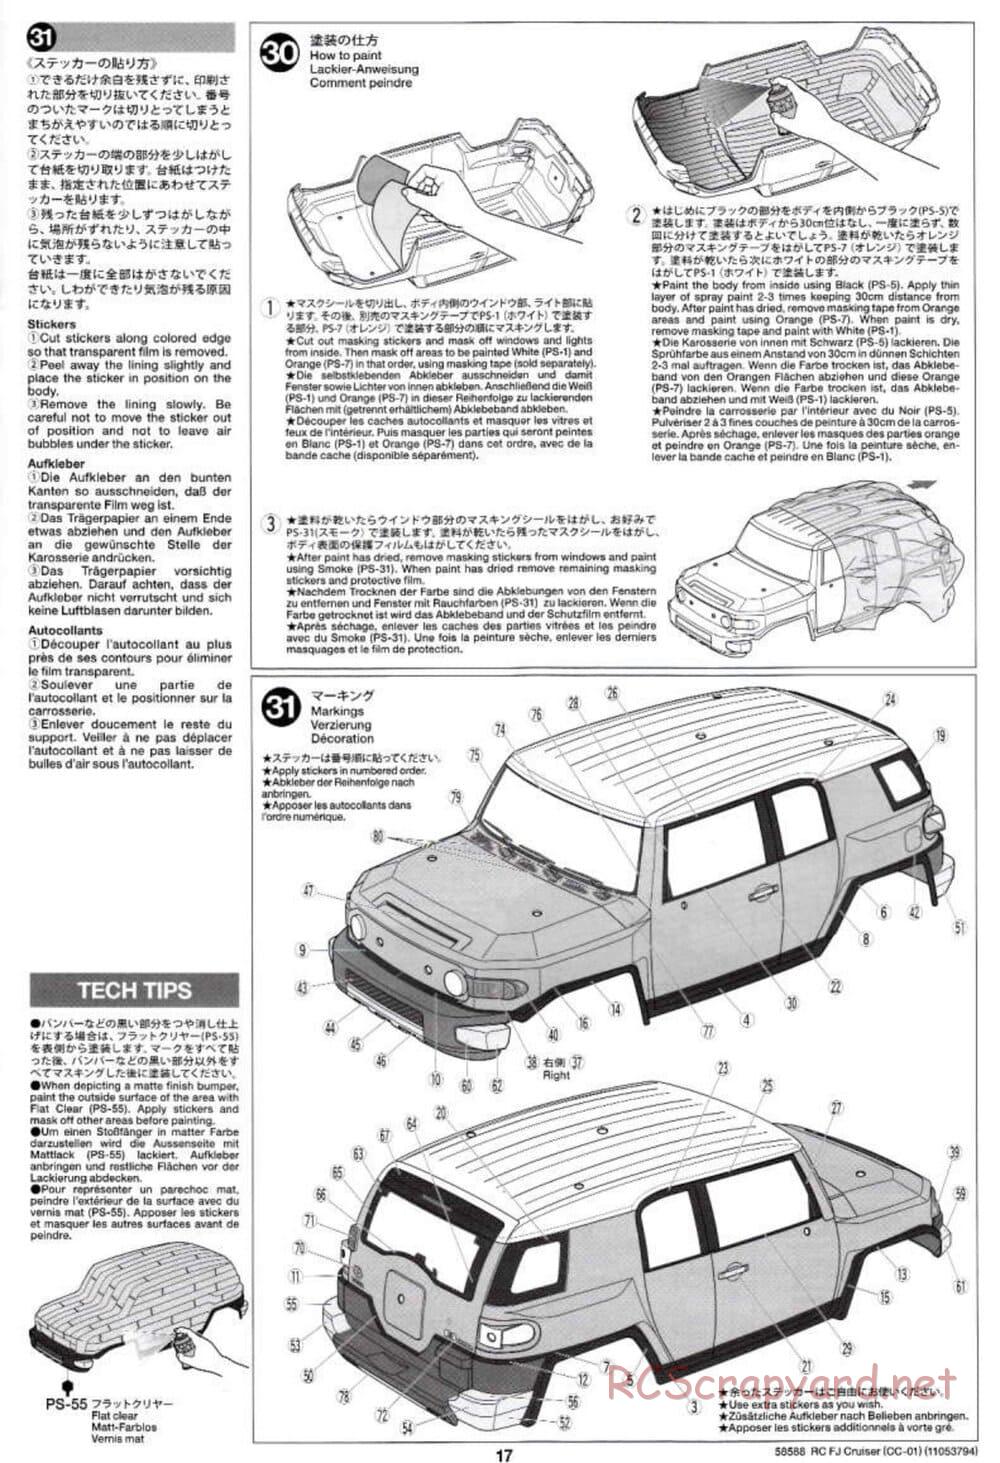 Tamiya - Toyota FJ Cruiser - CC-01 Chassis - Manual - Page 17